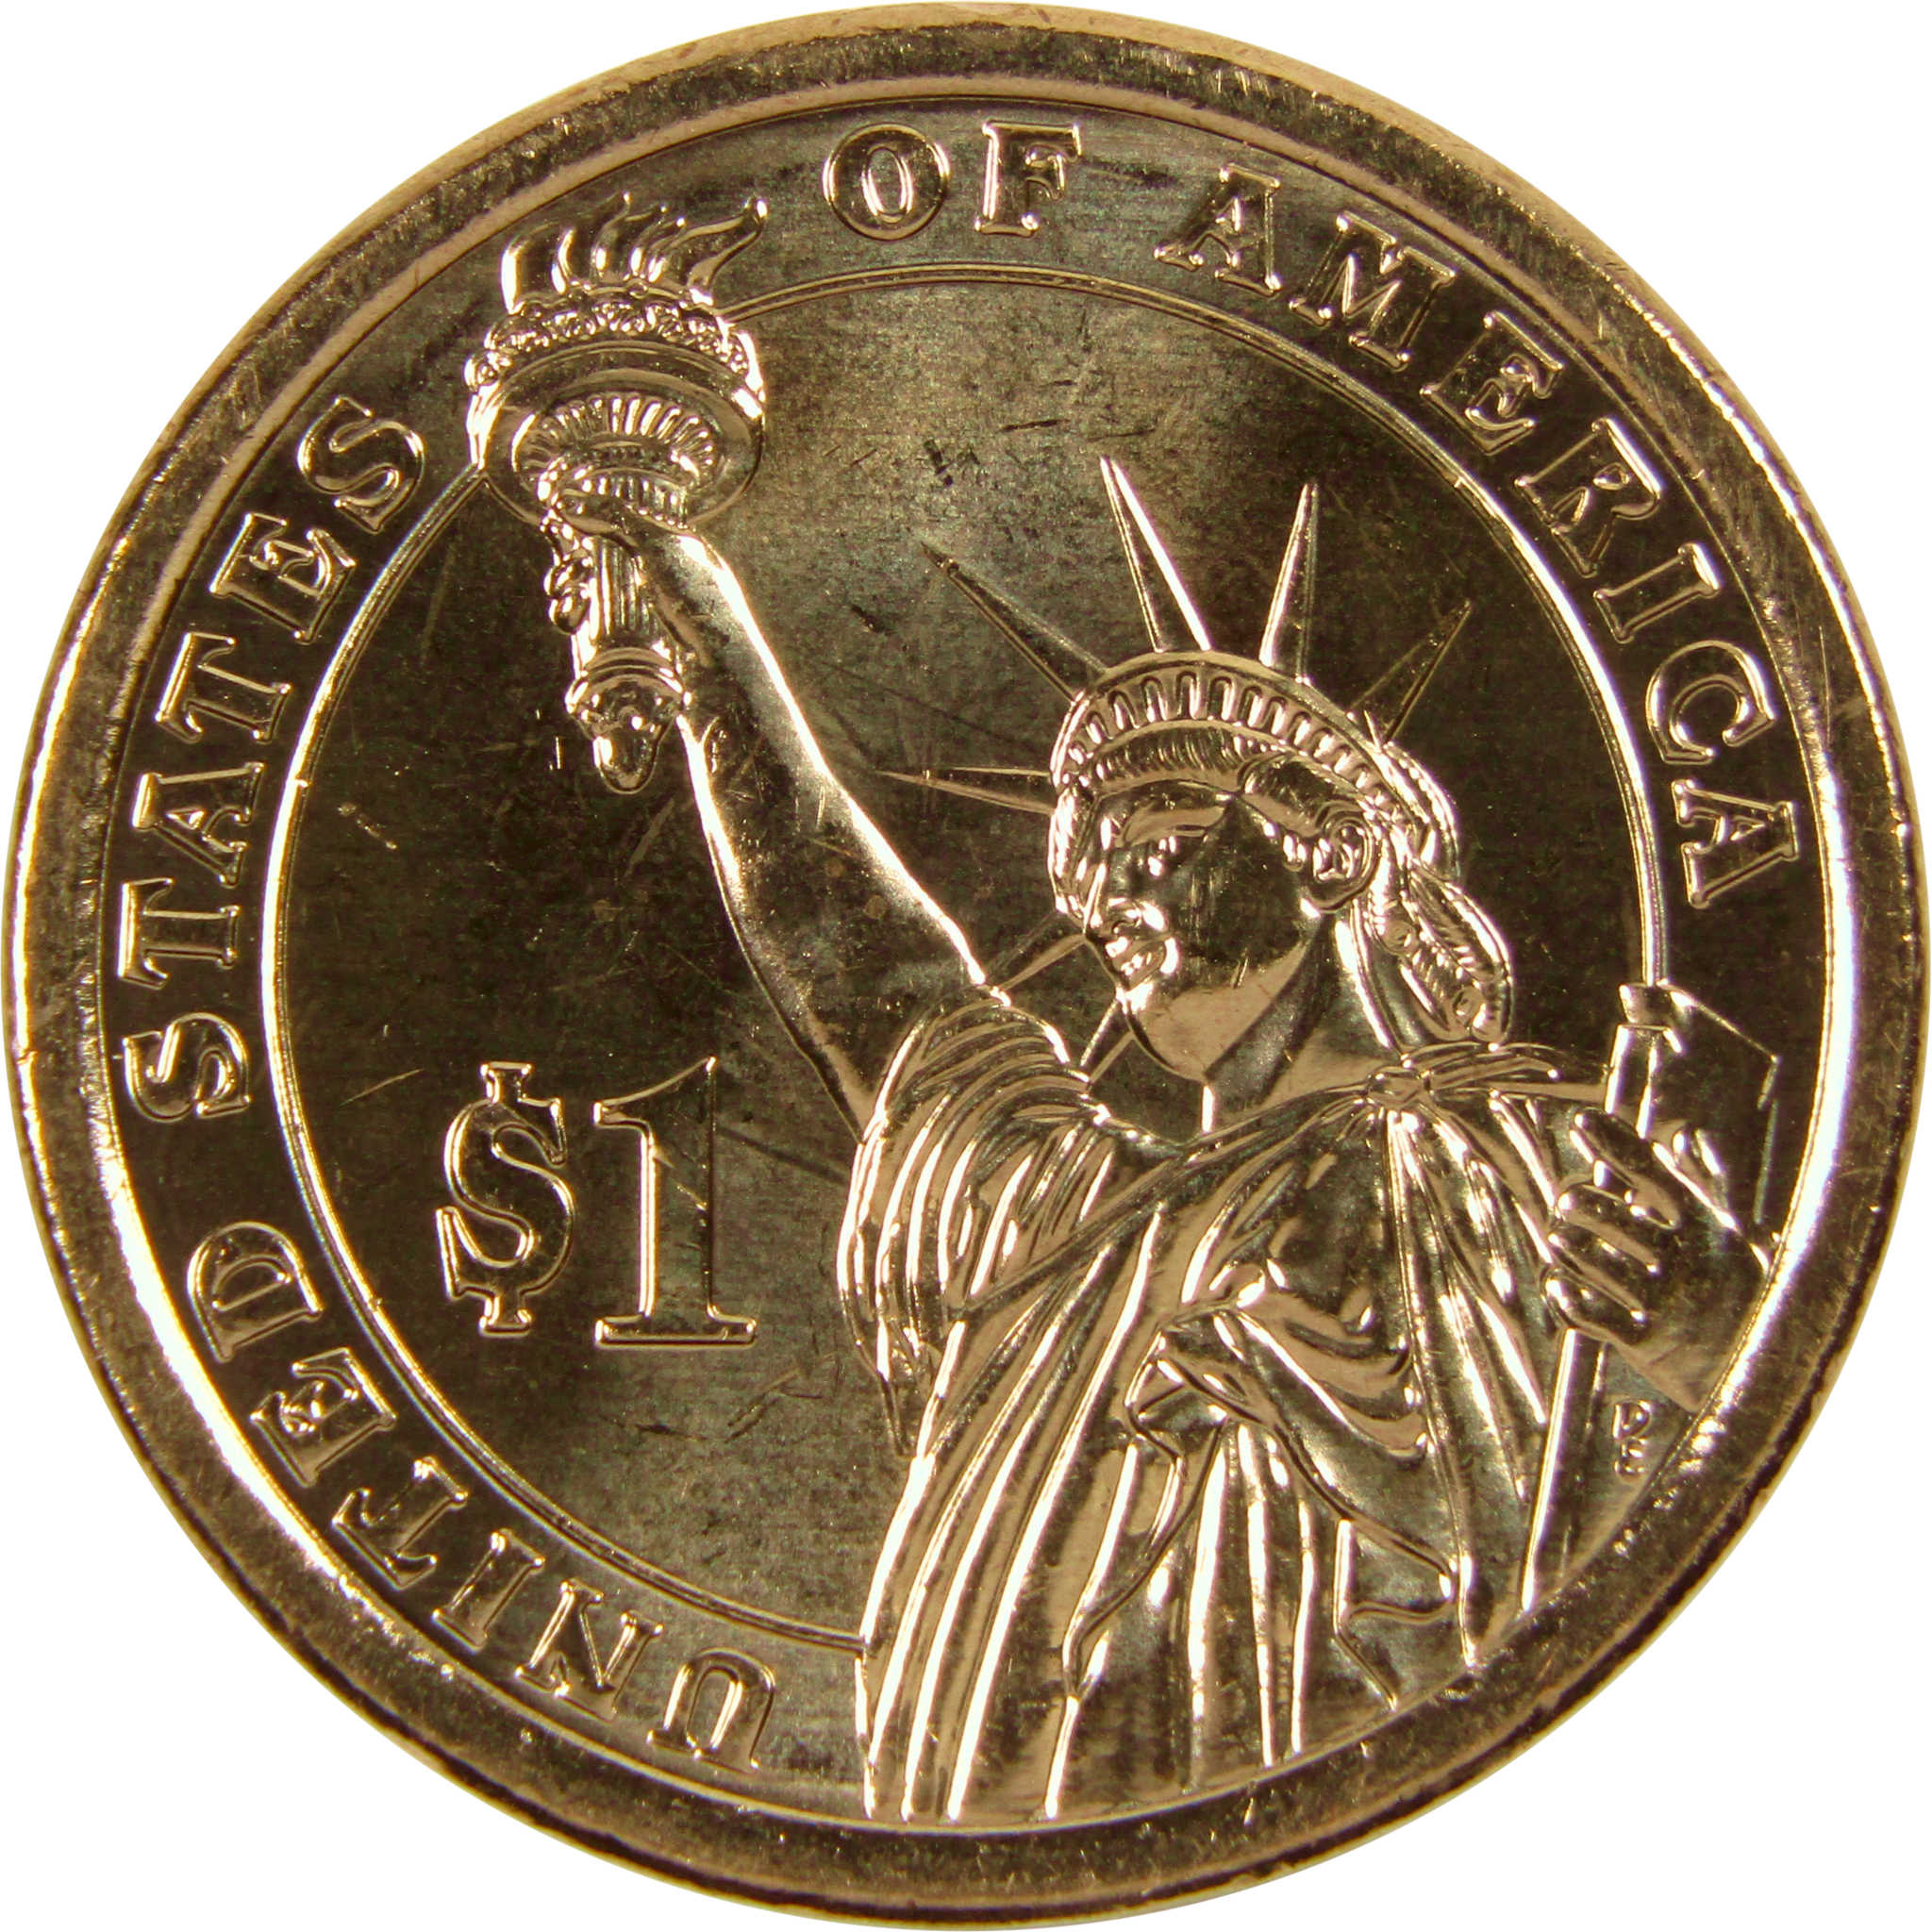 2011 D Andrew Johnson Presidential Dollar BU Uncirculated $1 Coin